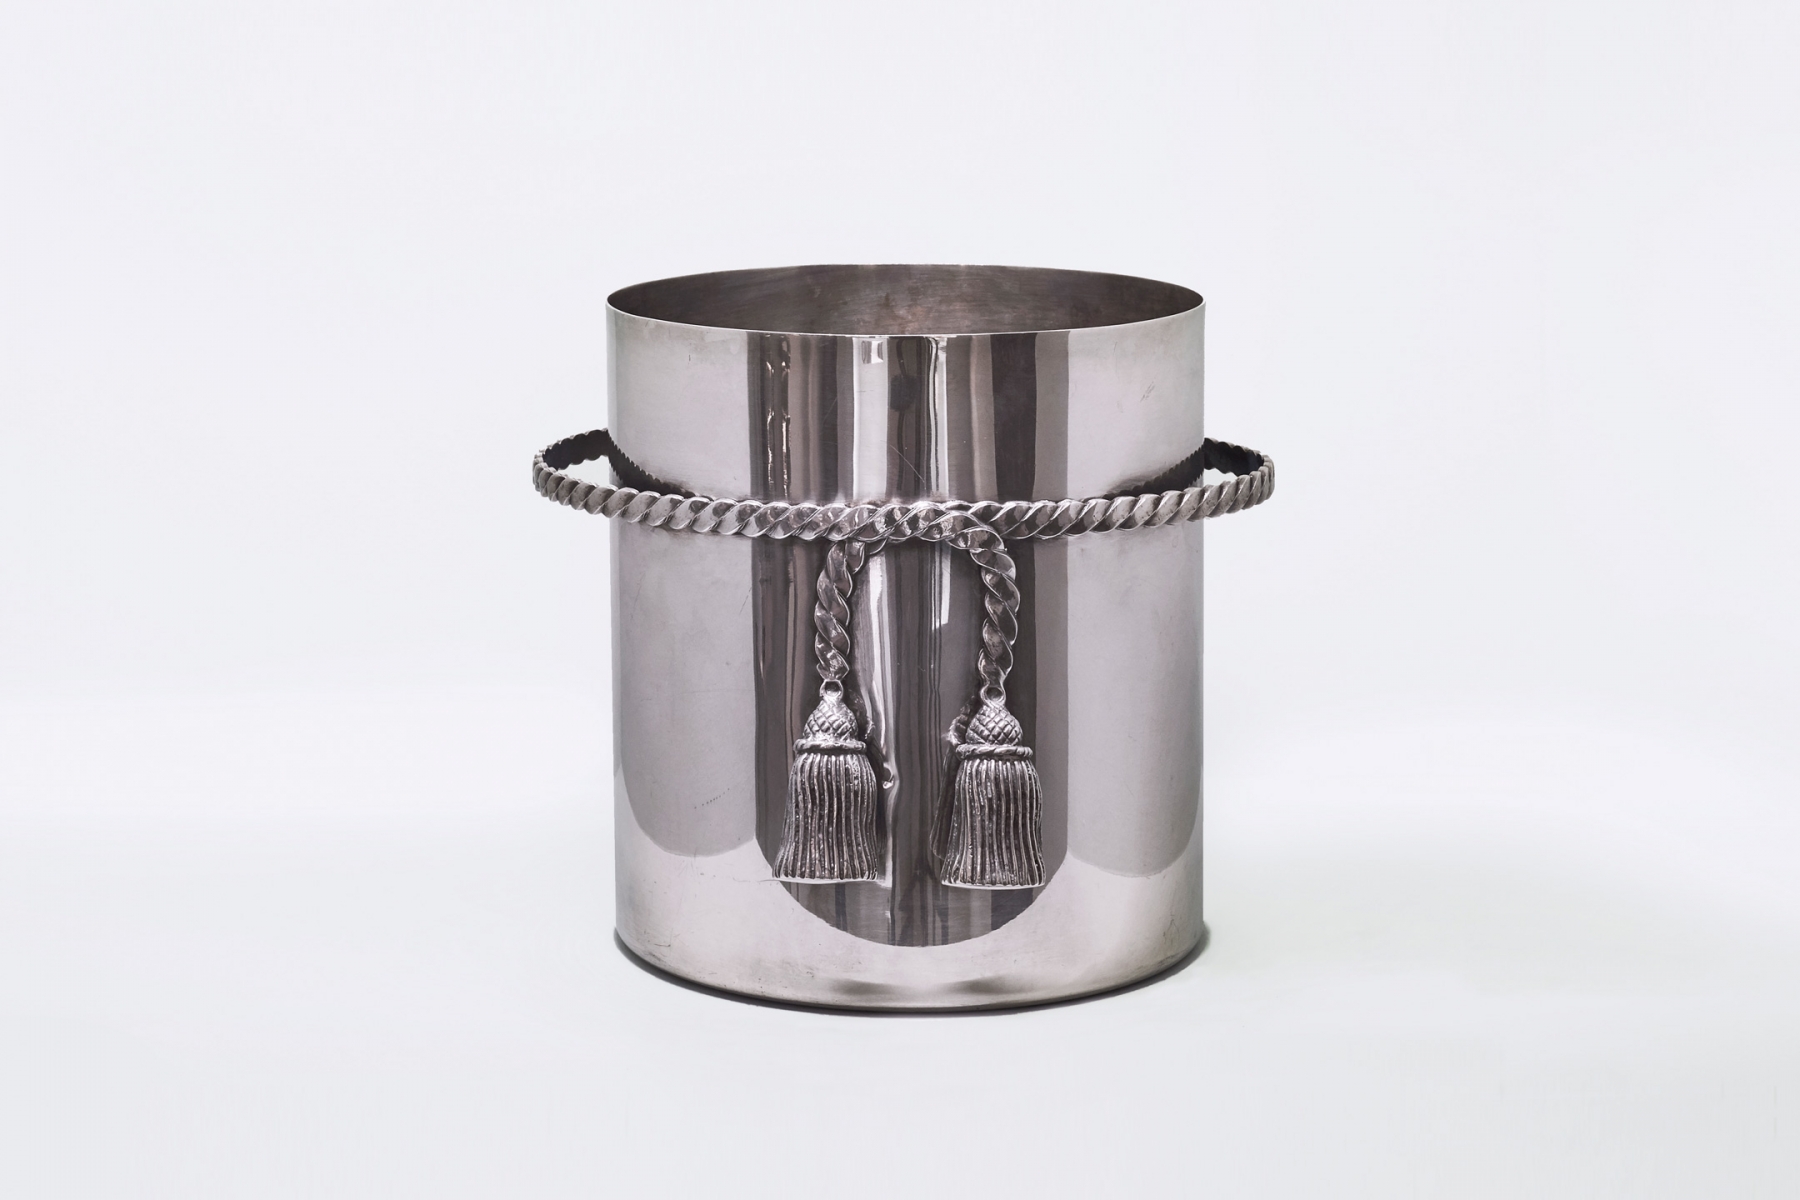 INQUIRE Maria Pergay&nbsp;Tassel Champagne Bucket, 1957